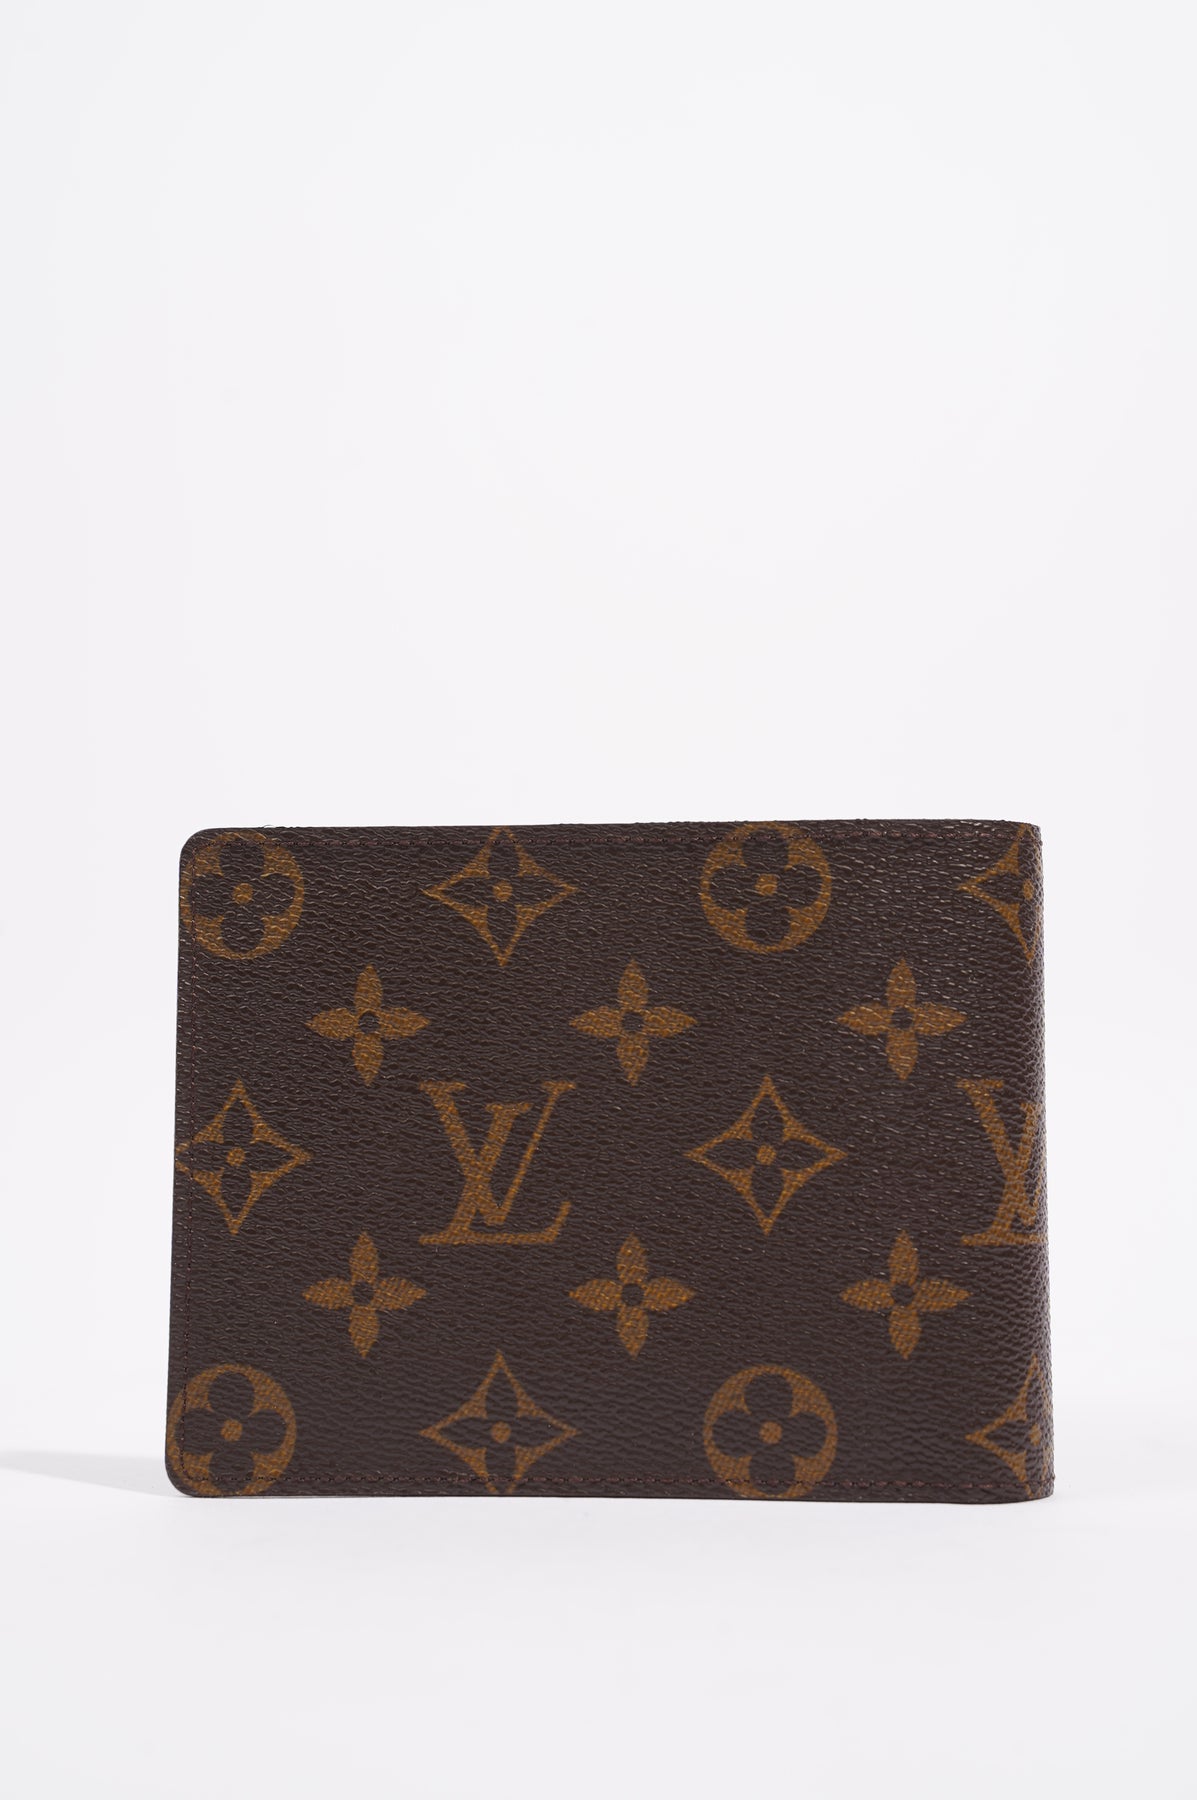 $800 Louis Vuitton Monogram Canvas Bifold French Purse Wallet